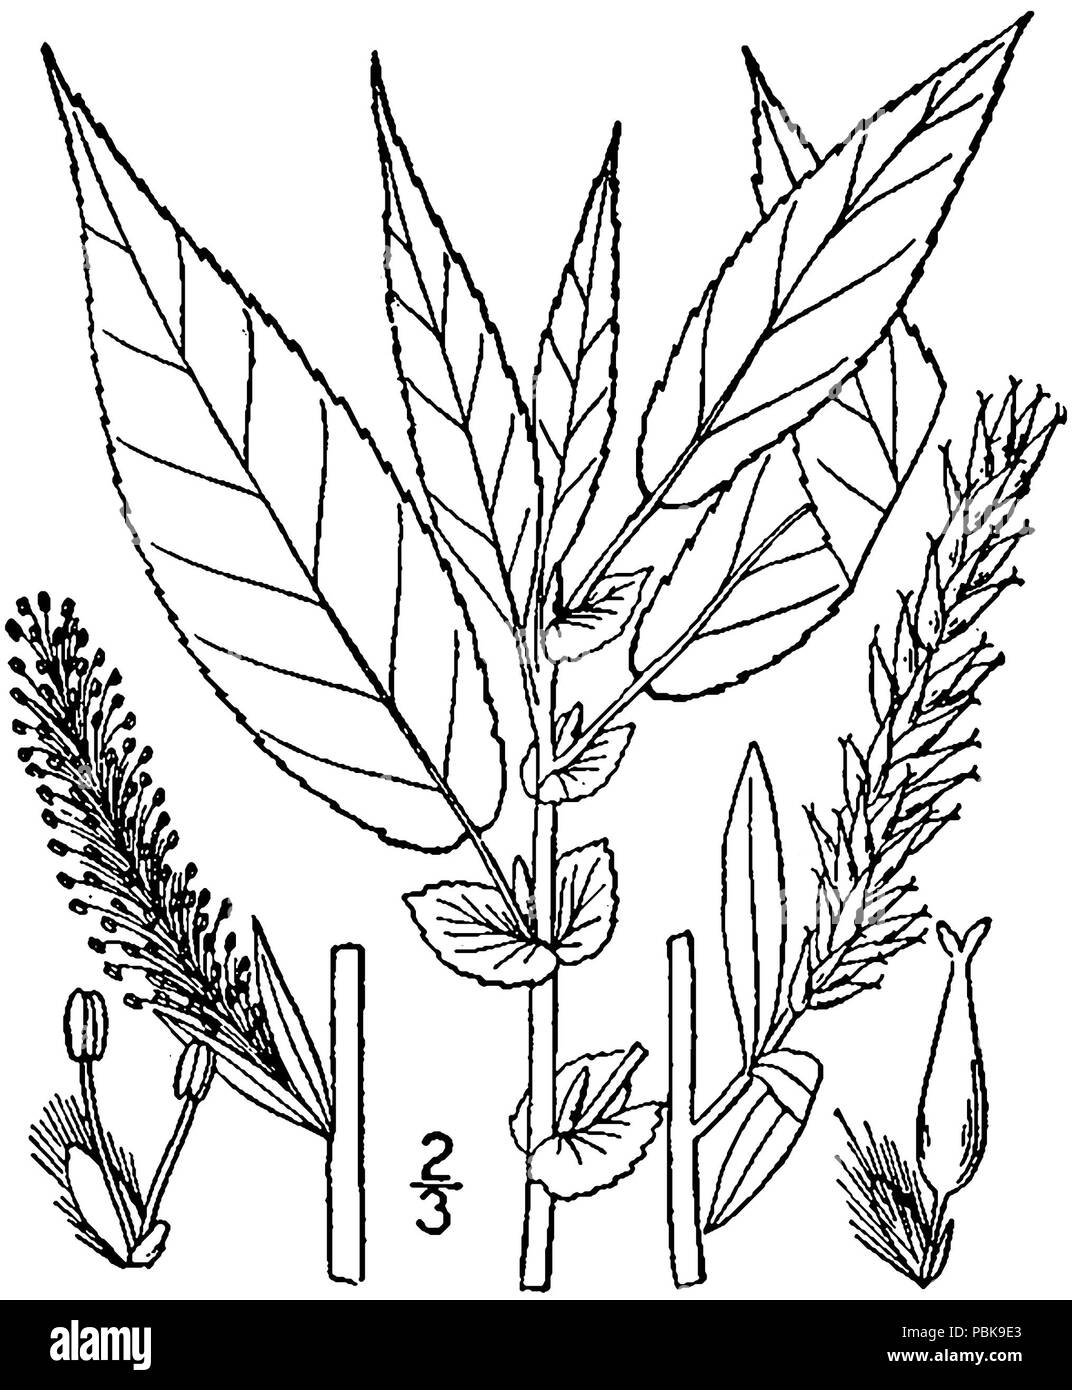 1284 Salix eriocephala BB-1913 Stock Photo